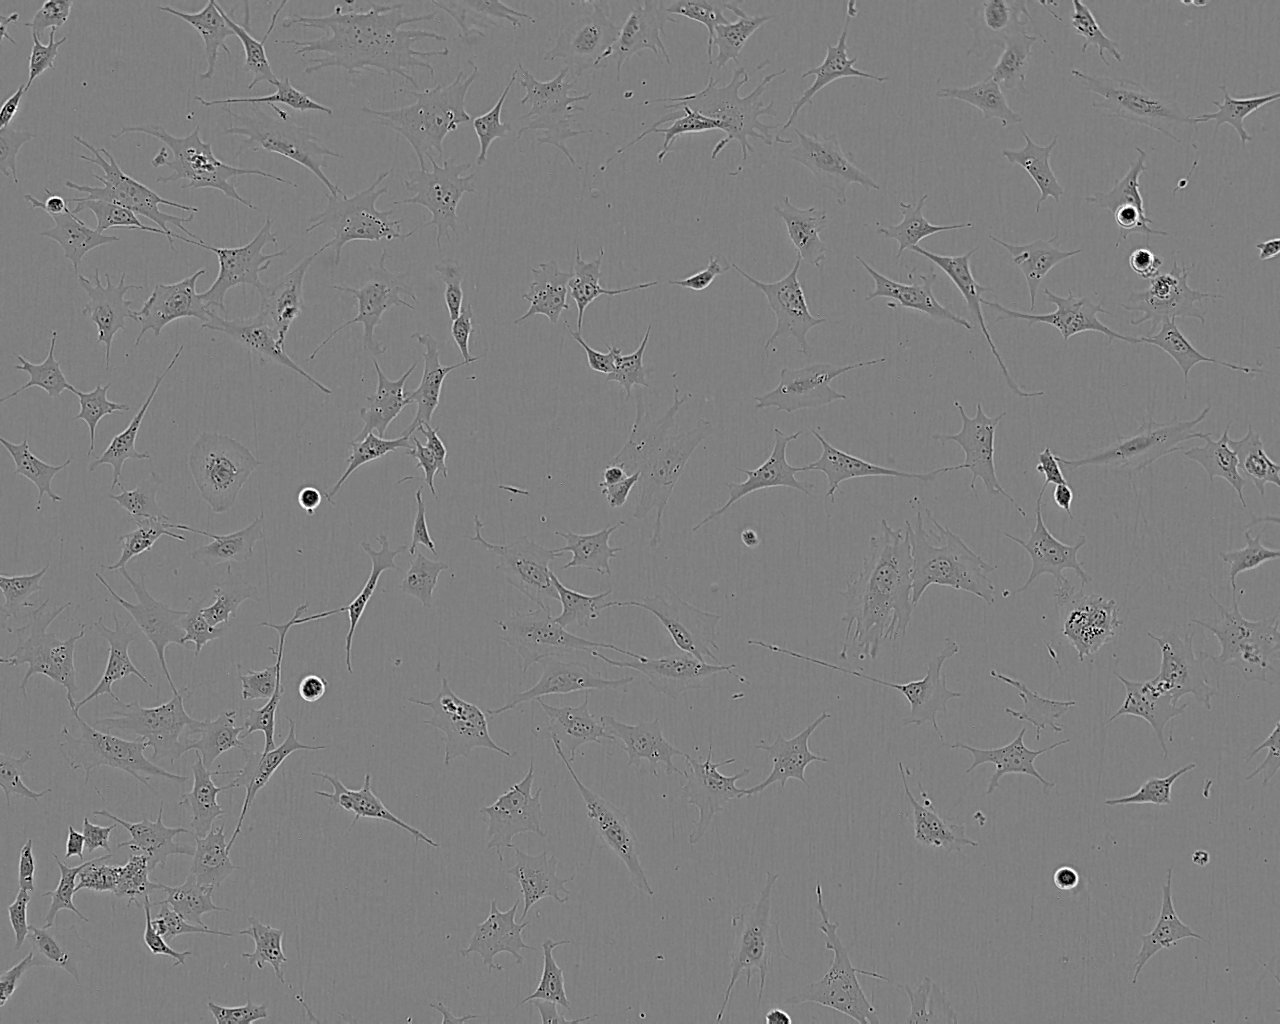 HEK293-A cell line腺病毒包装人胚肾细胞系,HEK293-A cell line